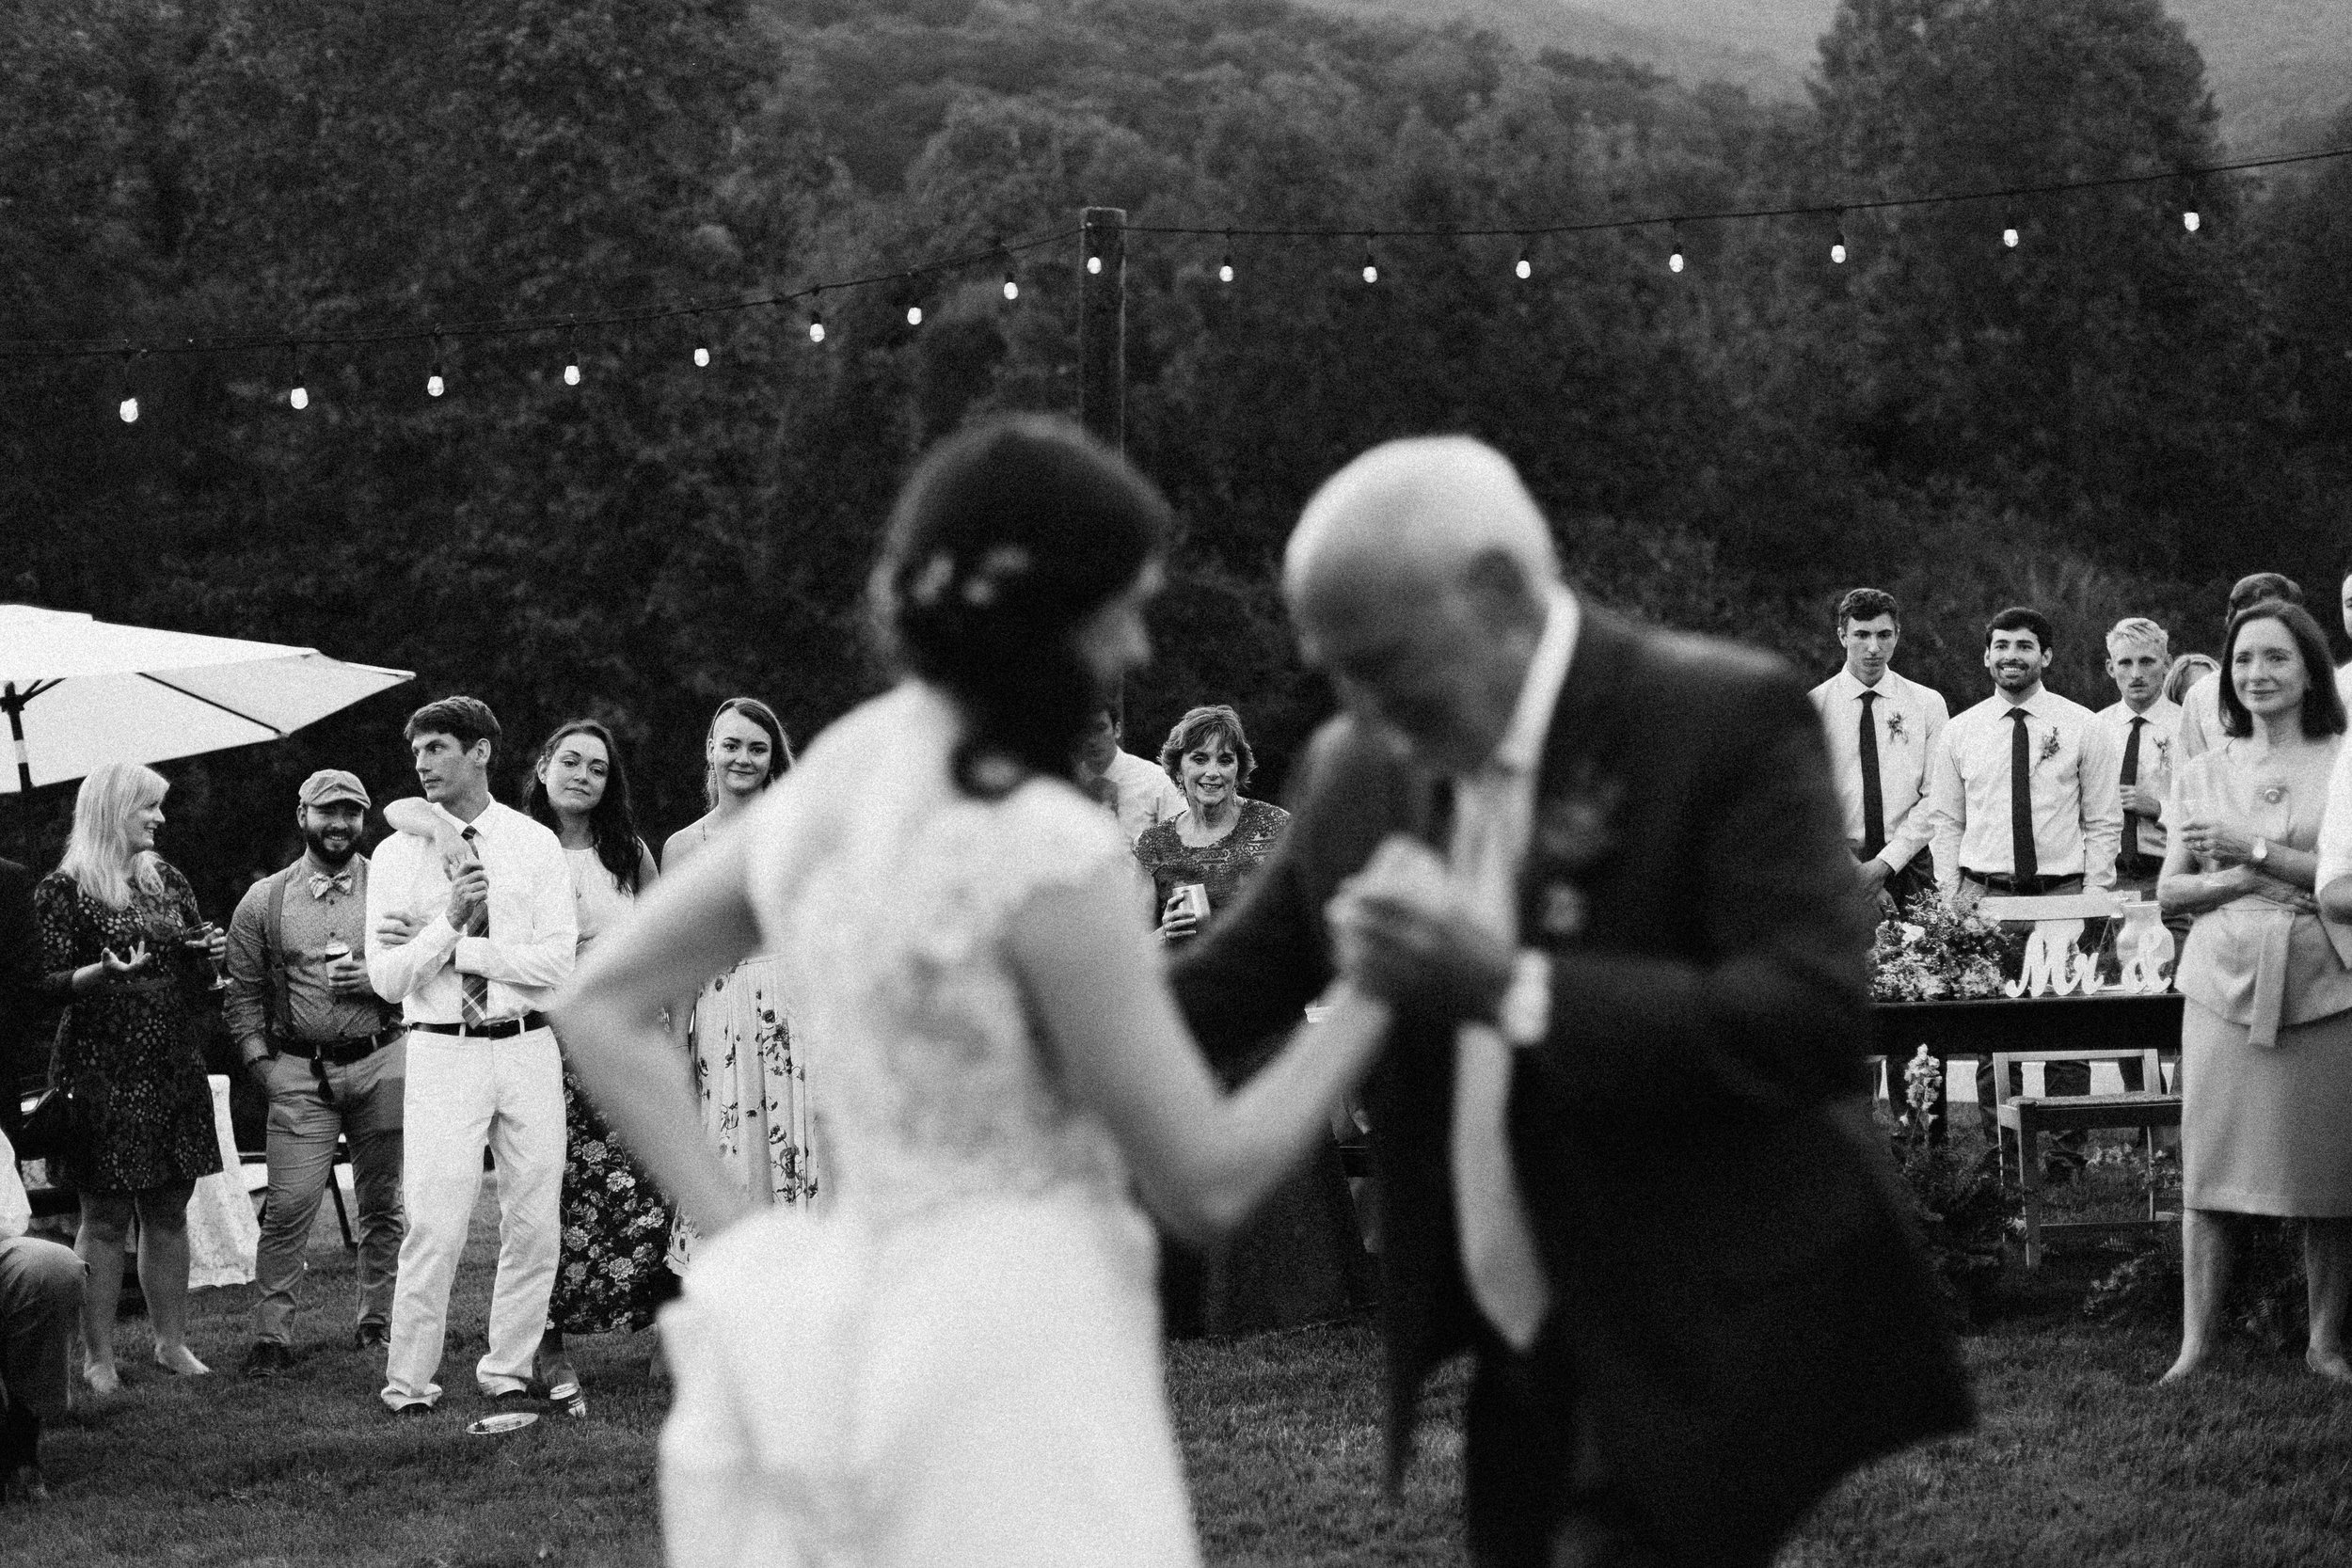 cleveland_georgia_mountain_laurel_farm_natural_classic_timeless_documentary_candid_wedding_emotional_photojournalism_river_west_1928.jpg